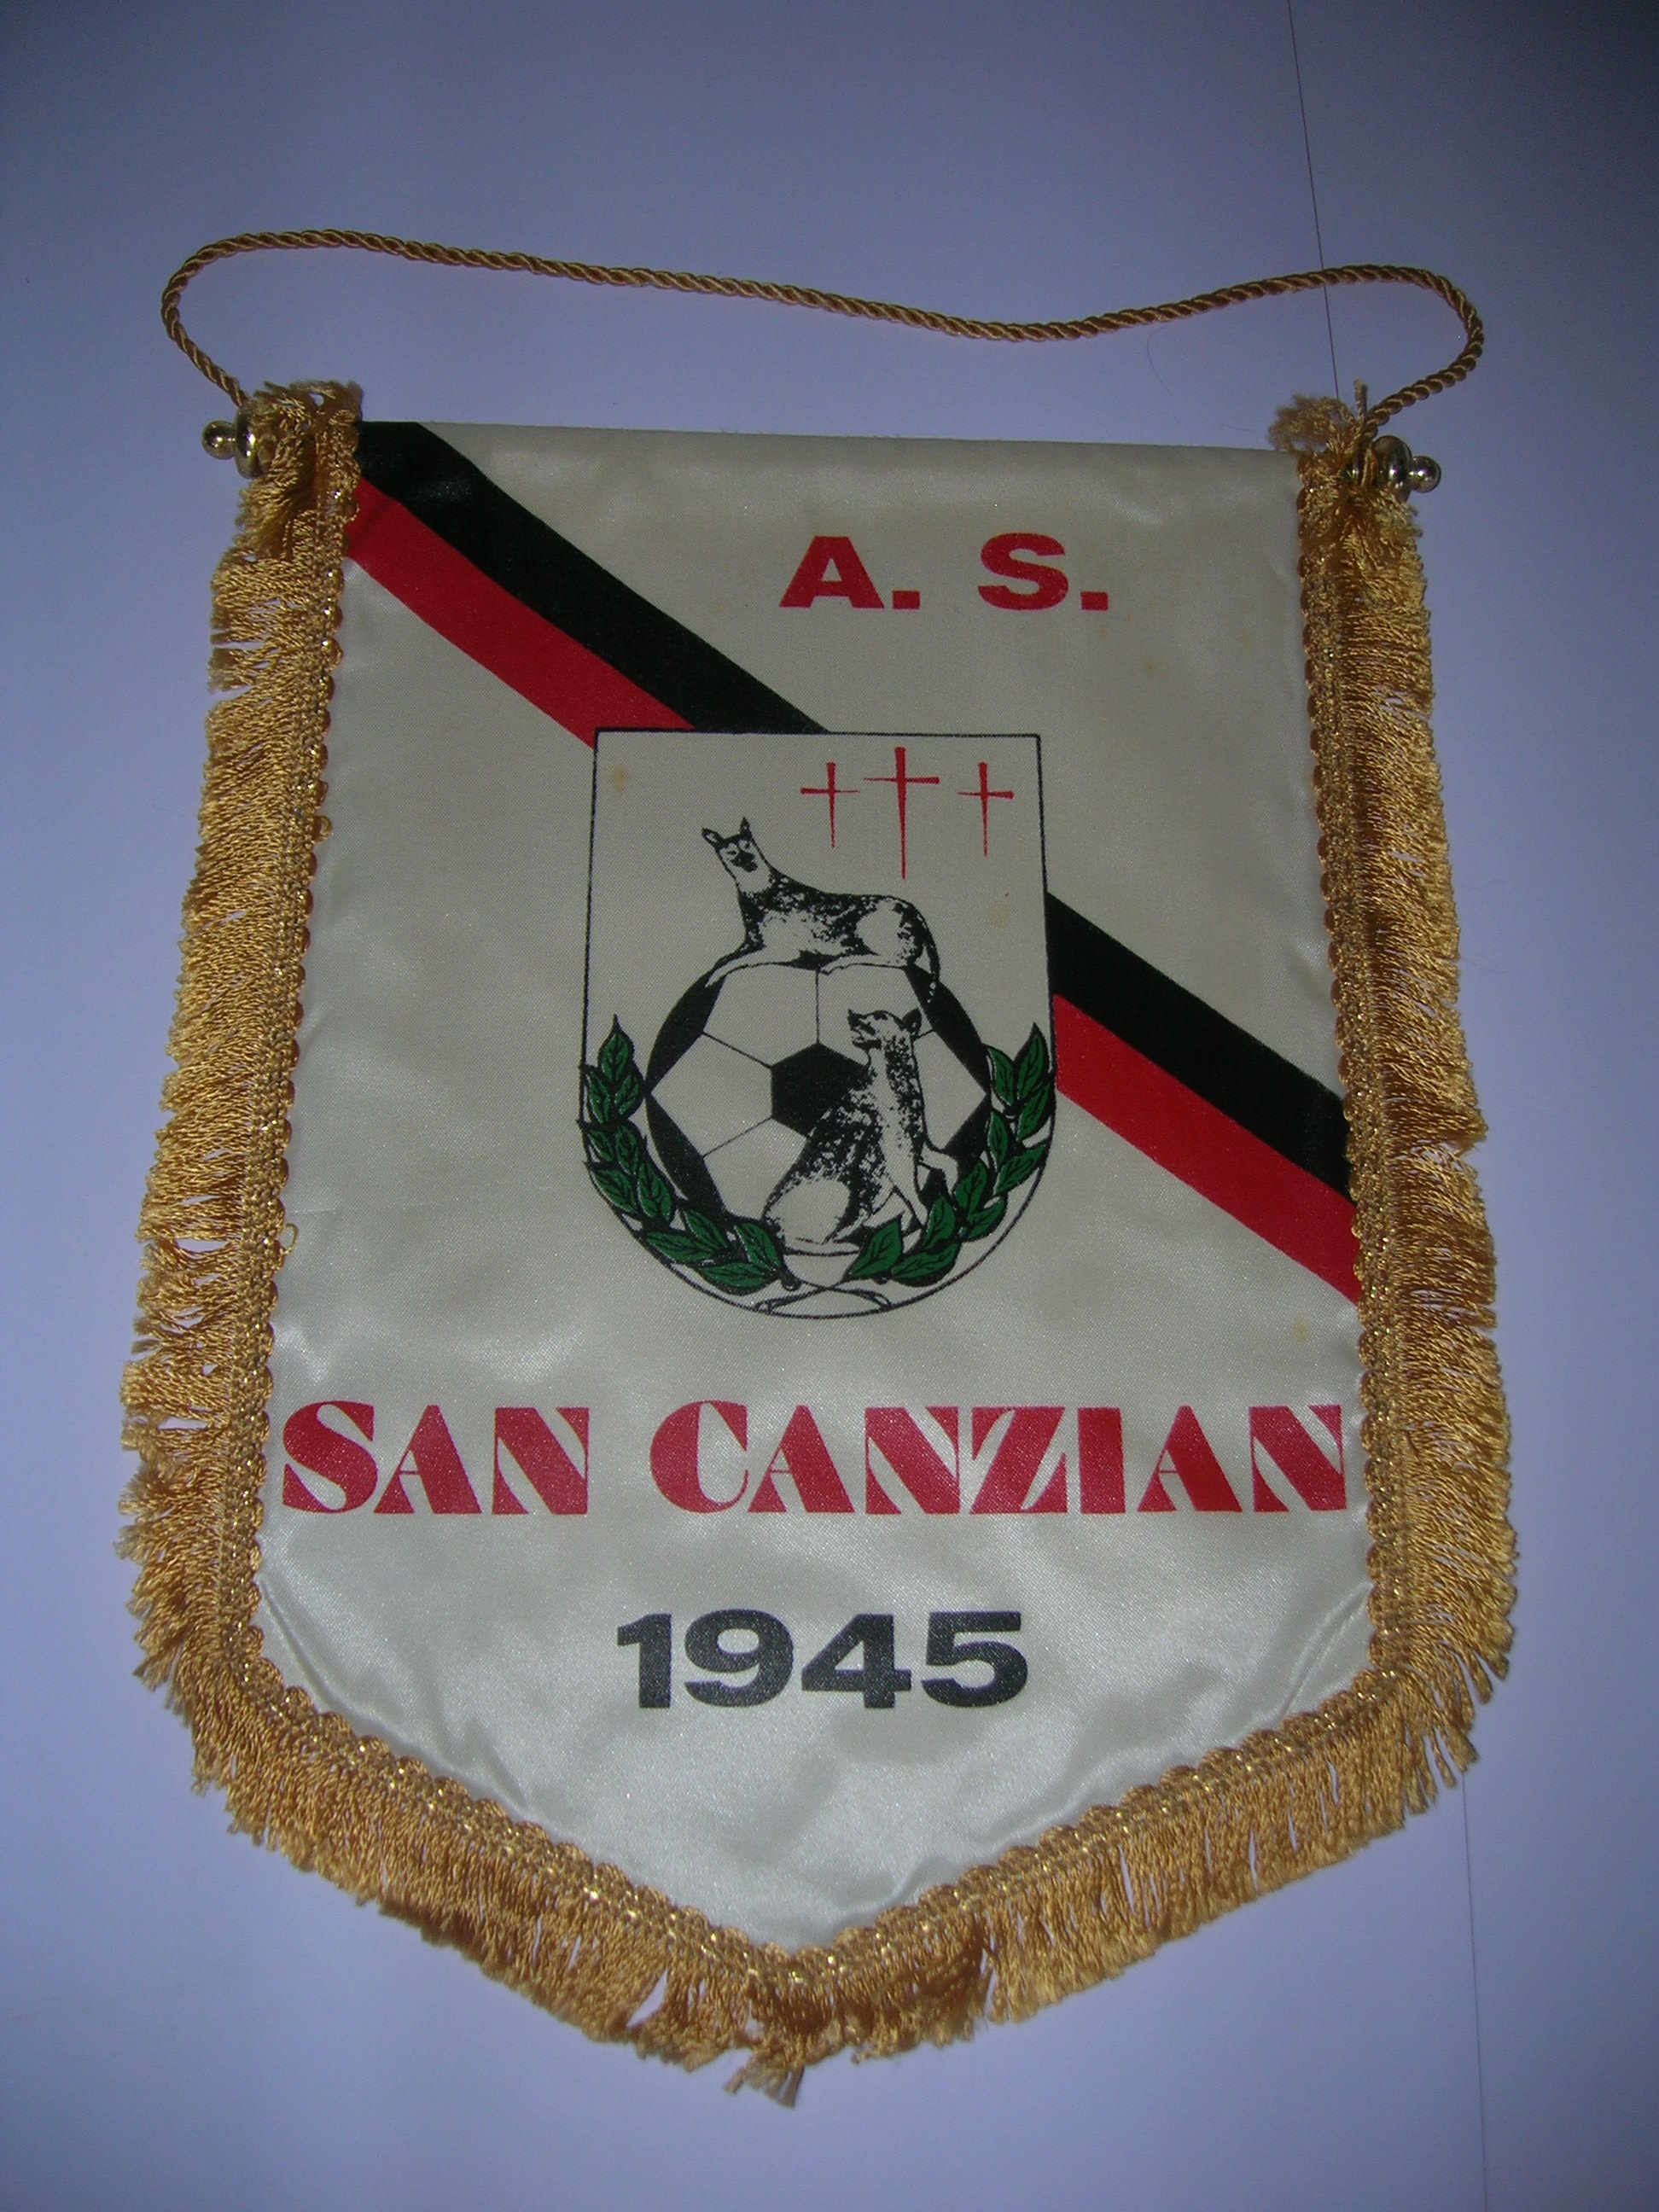 S. Canzian D82